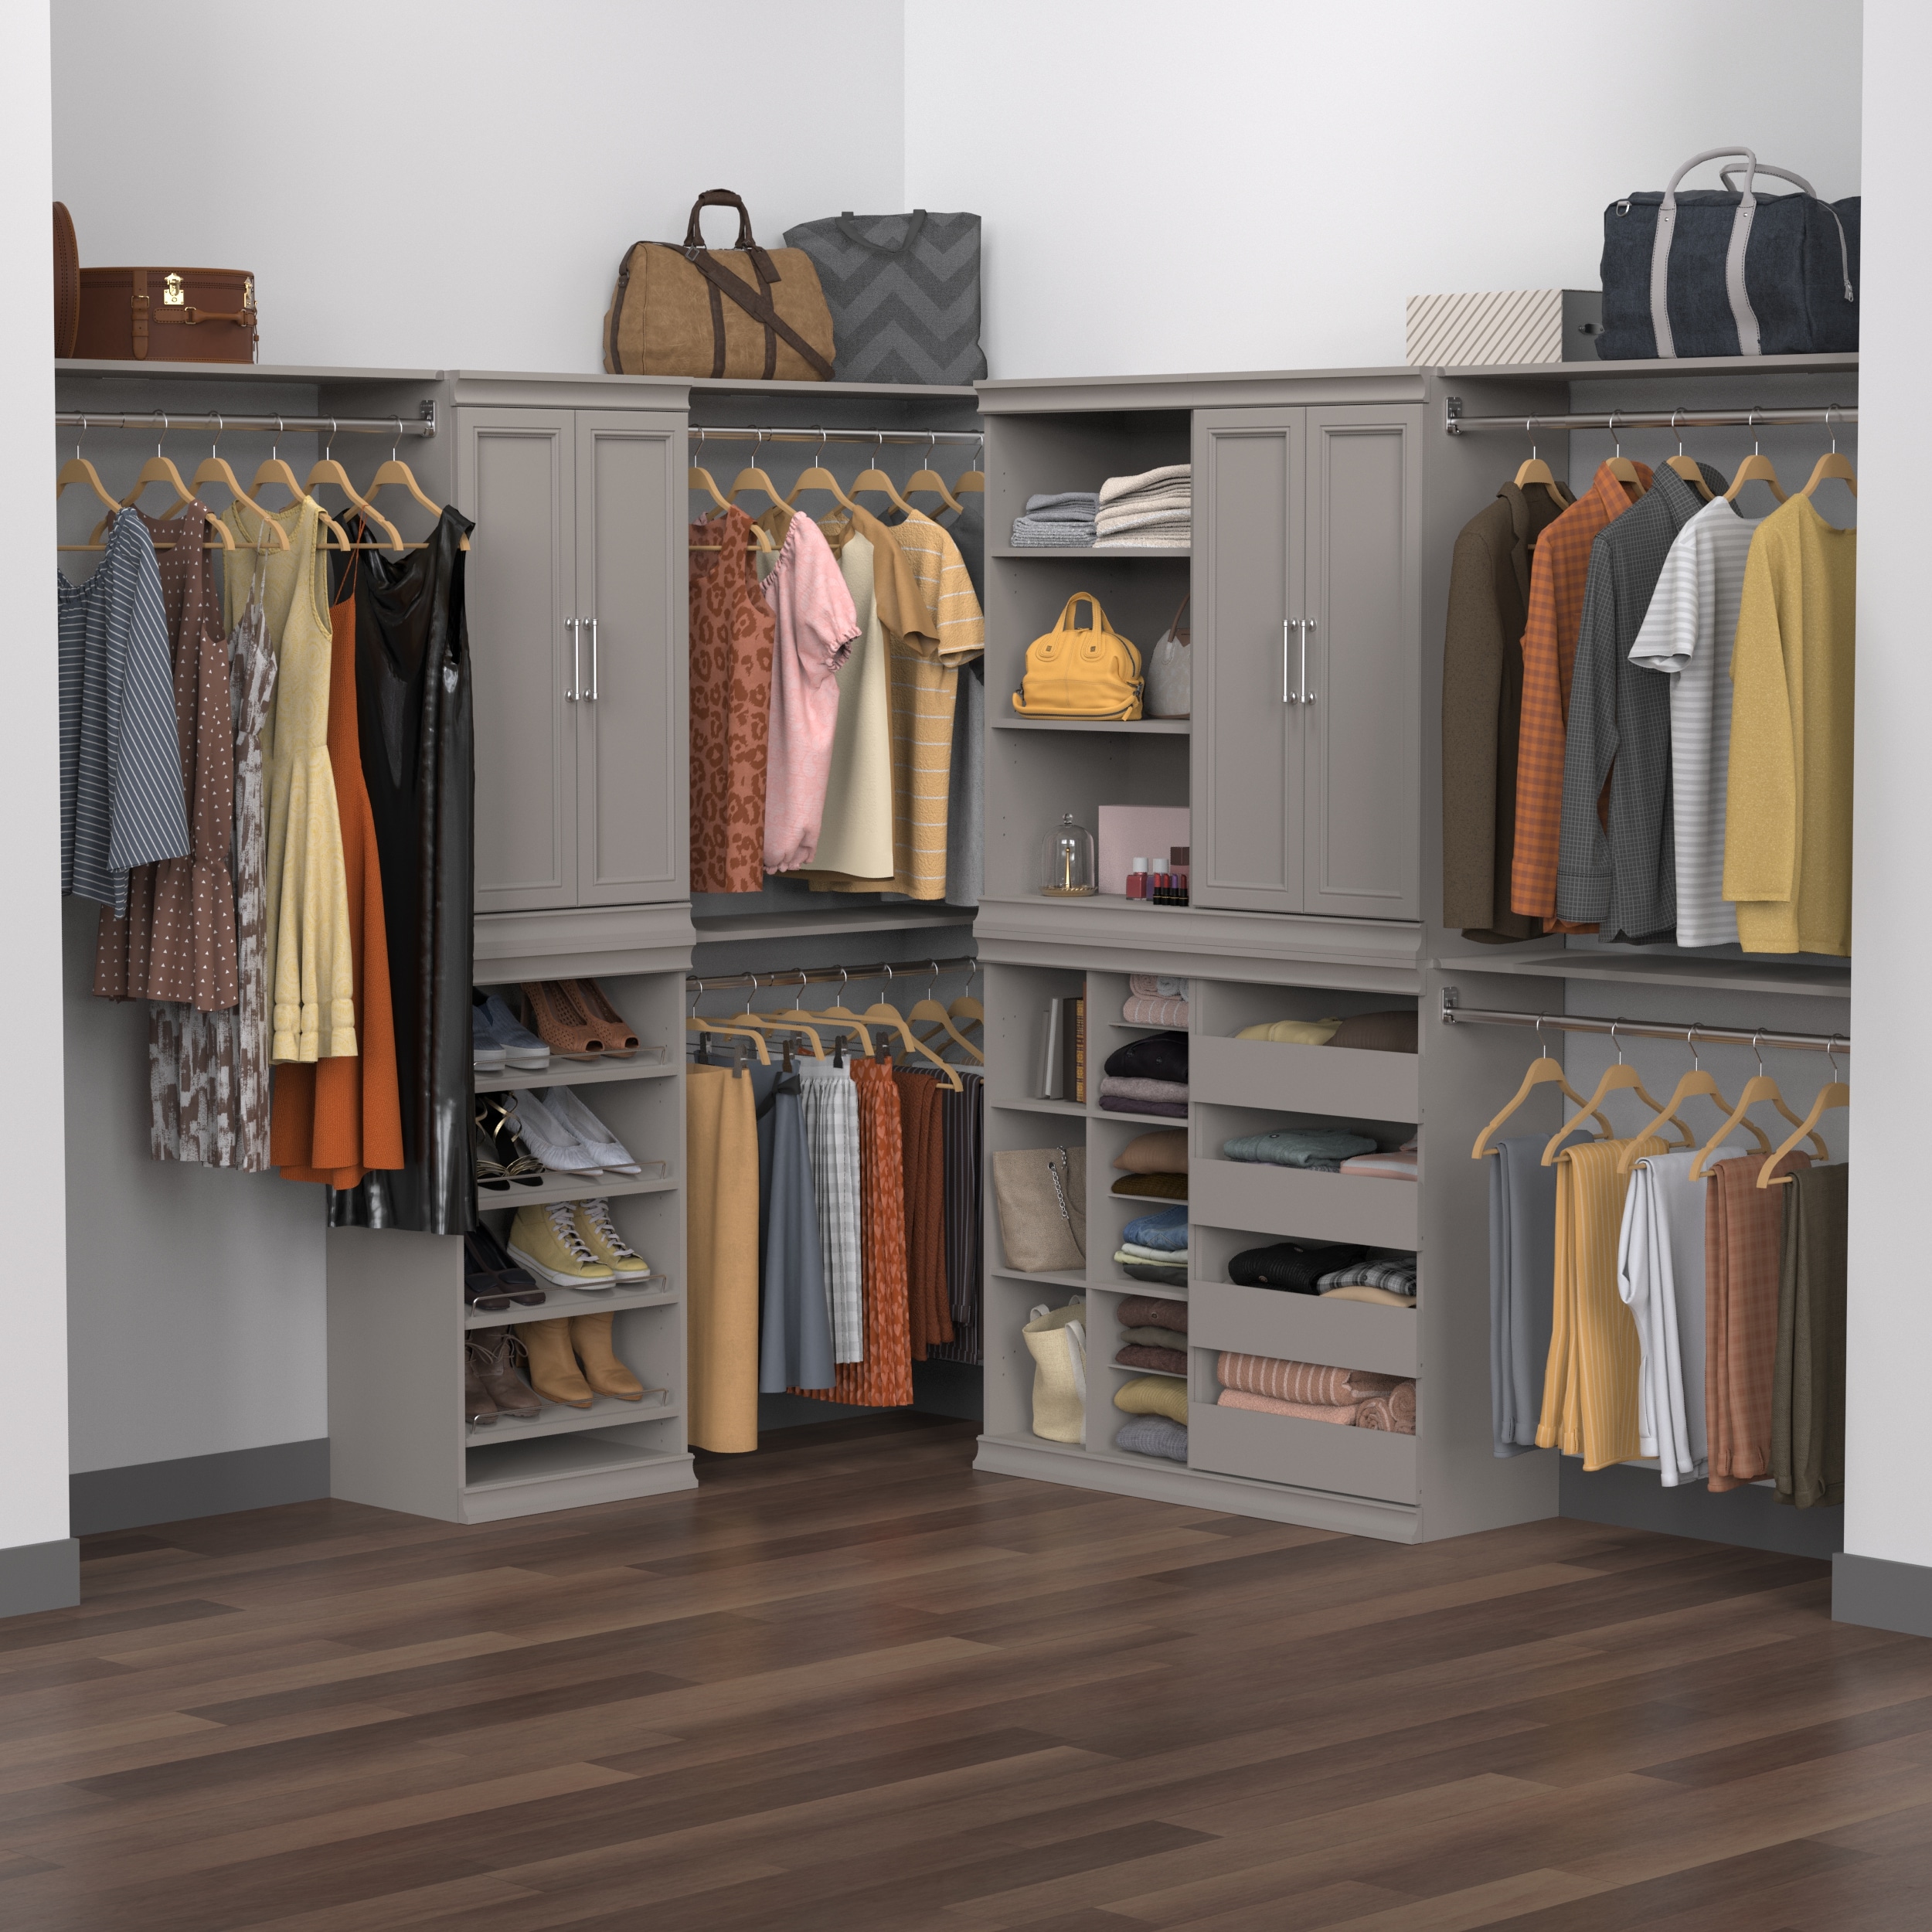 Walk In Closet with Modular Glass Handbag Shelves - Transitional - Closet